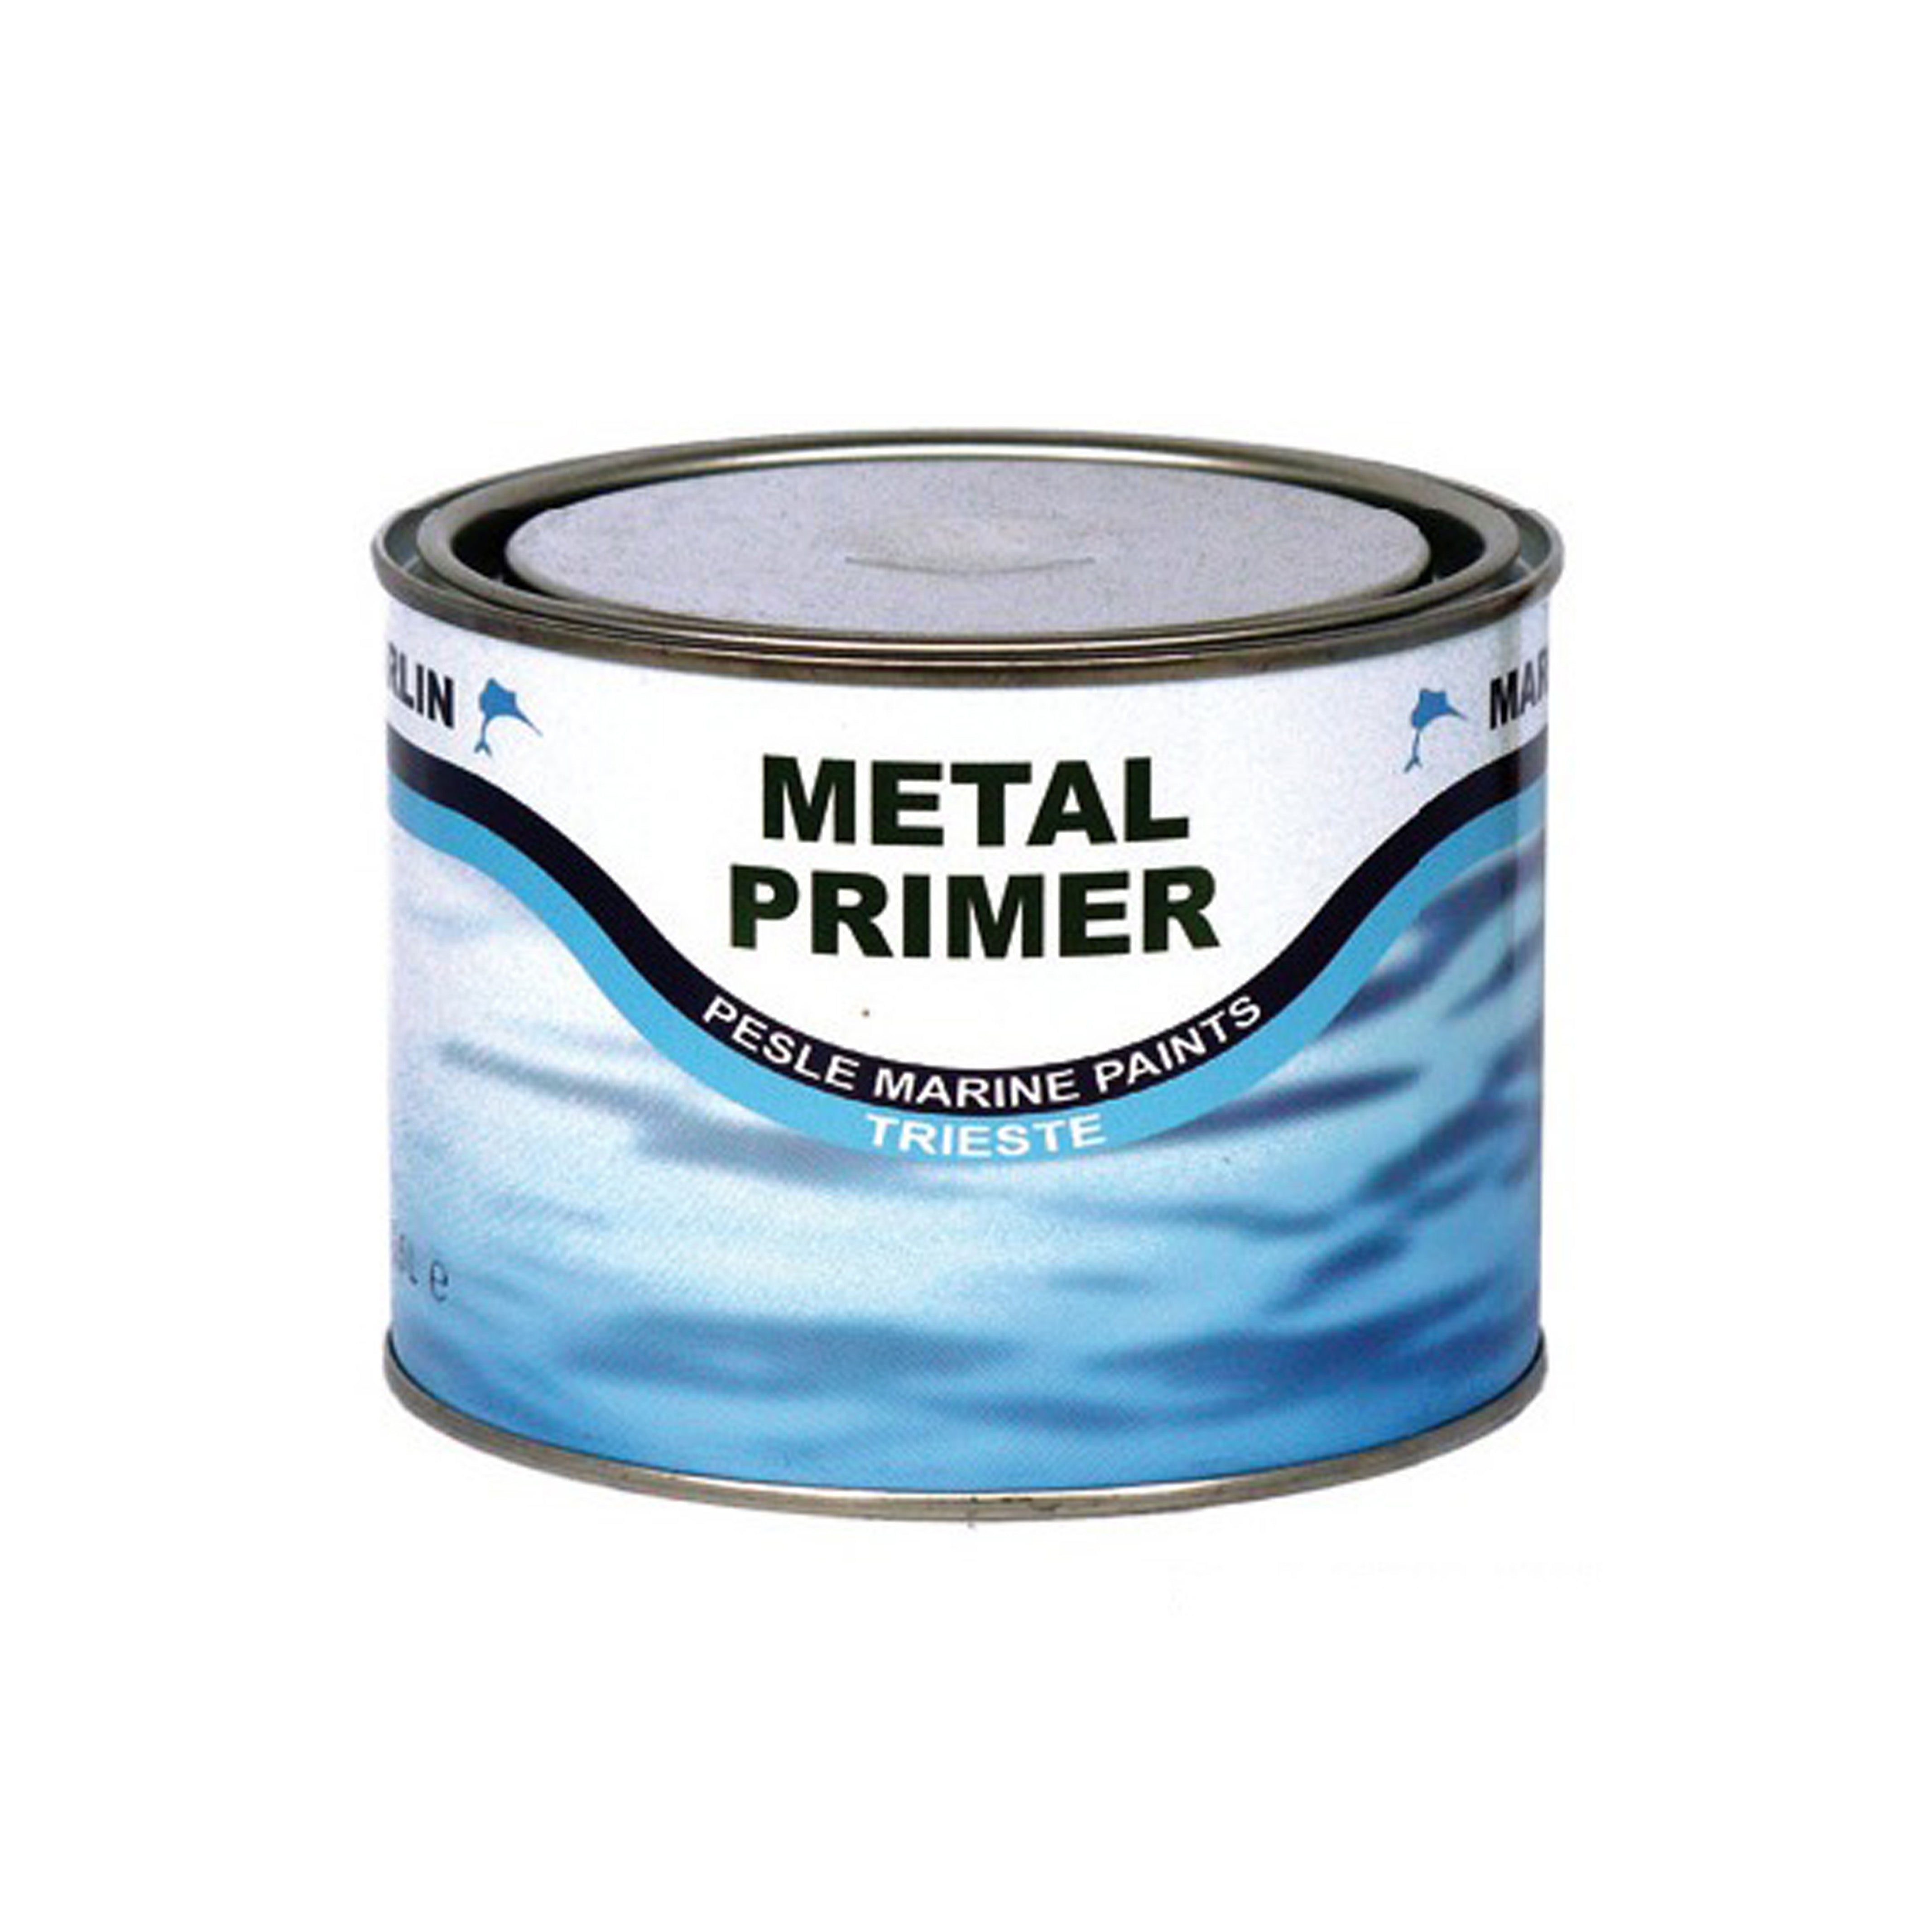 Marlin Metal Primer